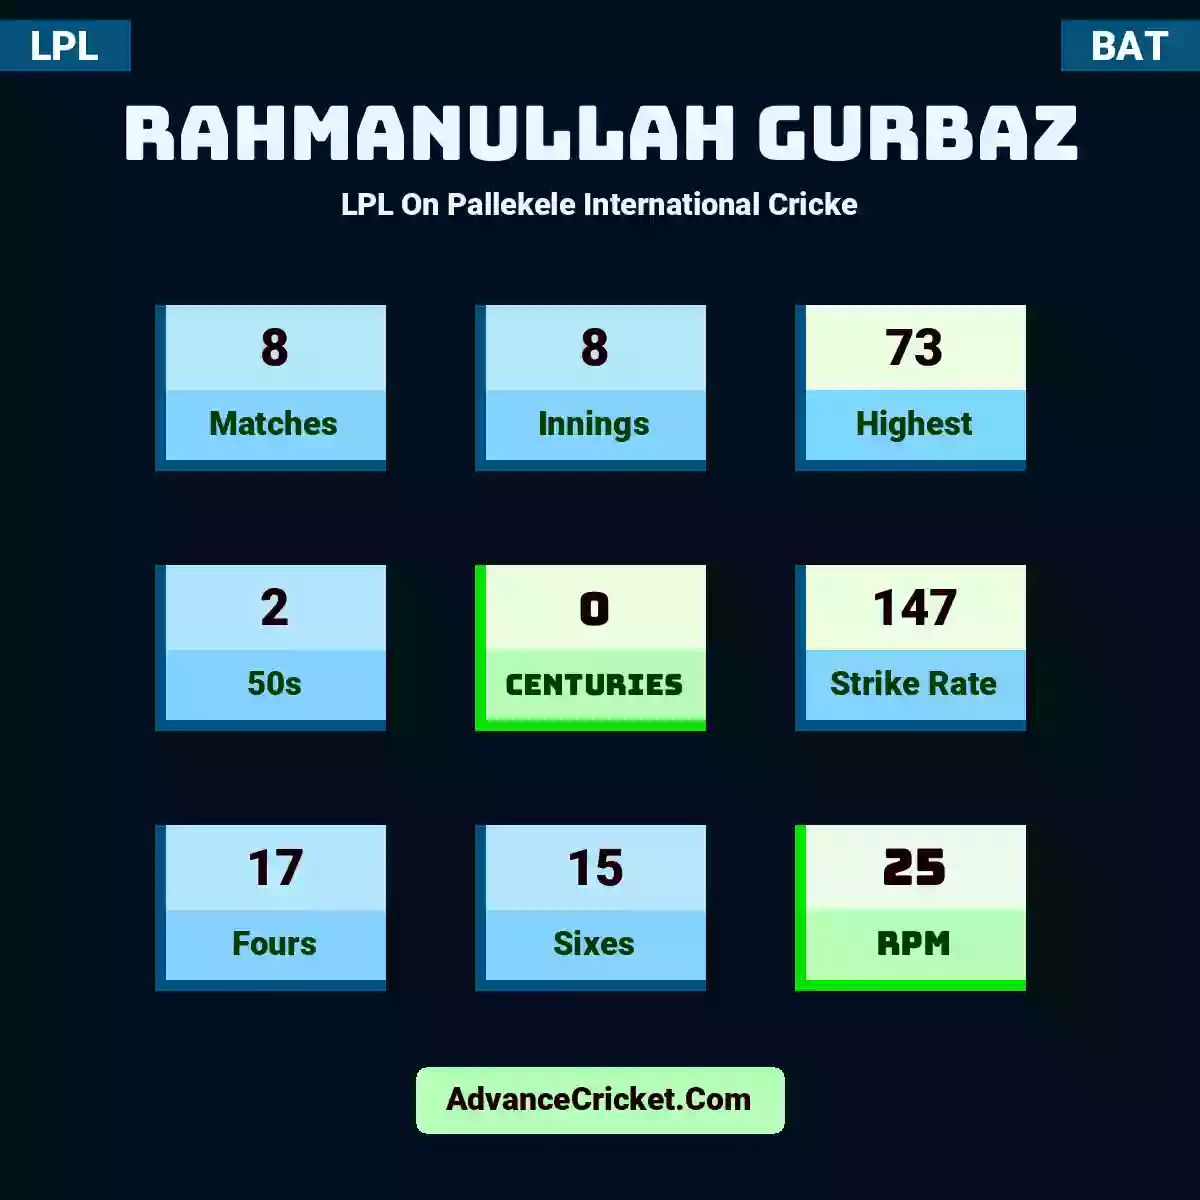 Rahmanullah Gurbaz LPL  On Pallekele International Cricke, Rahmanullah Gurbaz played 8 matches, scored 73 runs as highest, 2 half-centuries, and 0 centuries, with a strike rate of 147. R.Gurbaz hit 17 fours and 15 sixes, with an RPM of 25.